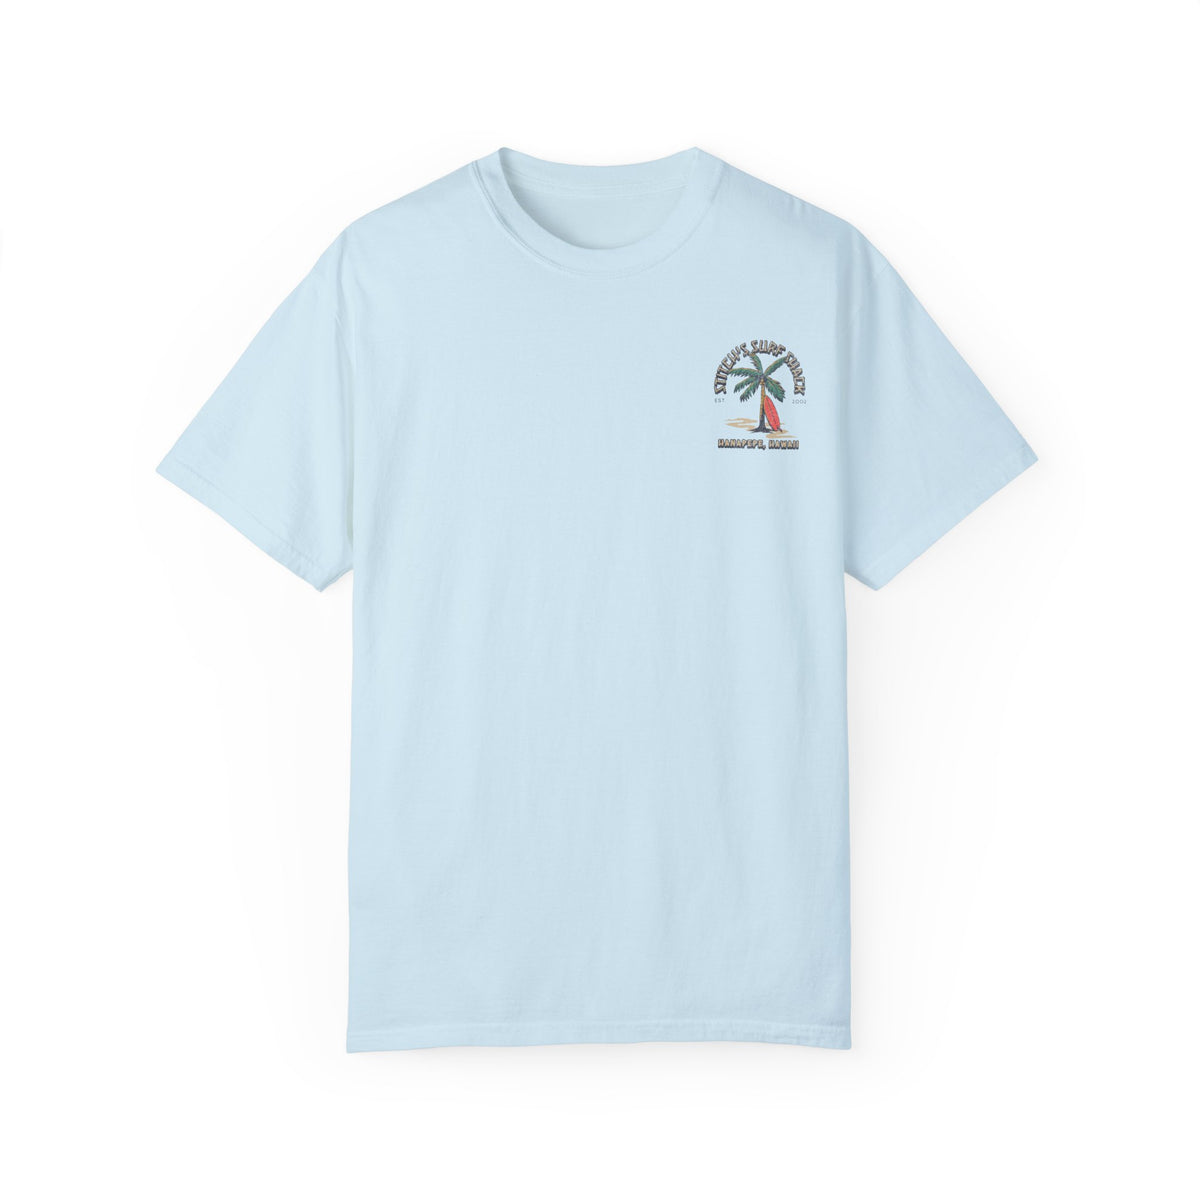 Stitch's Surf Shack Comfort Colors Unisex Garment-Dyed T-shirt